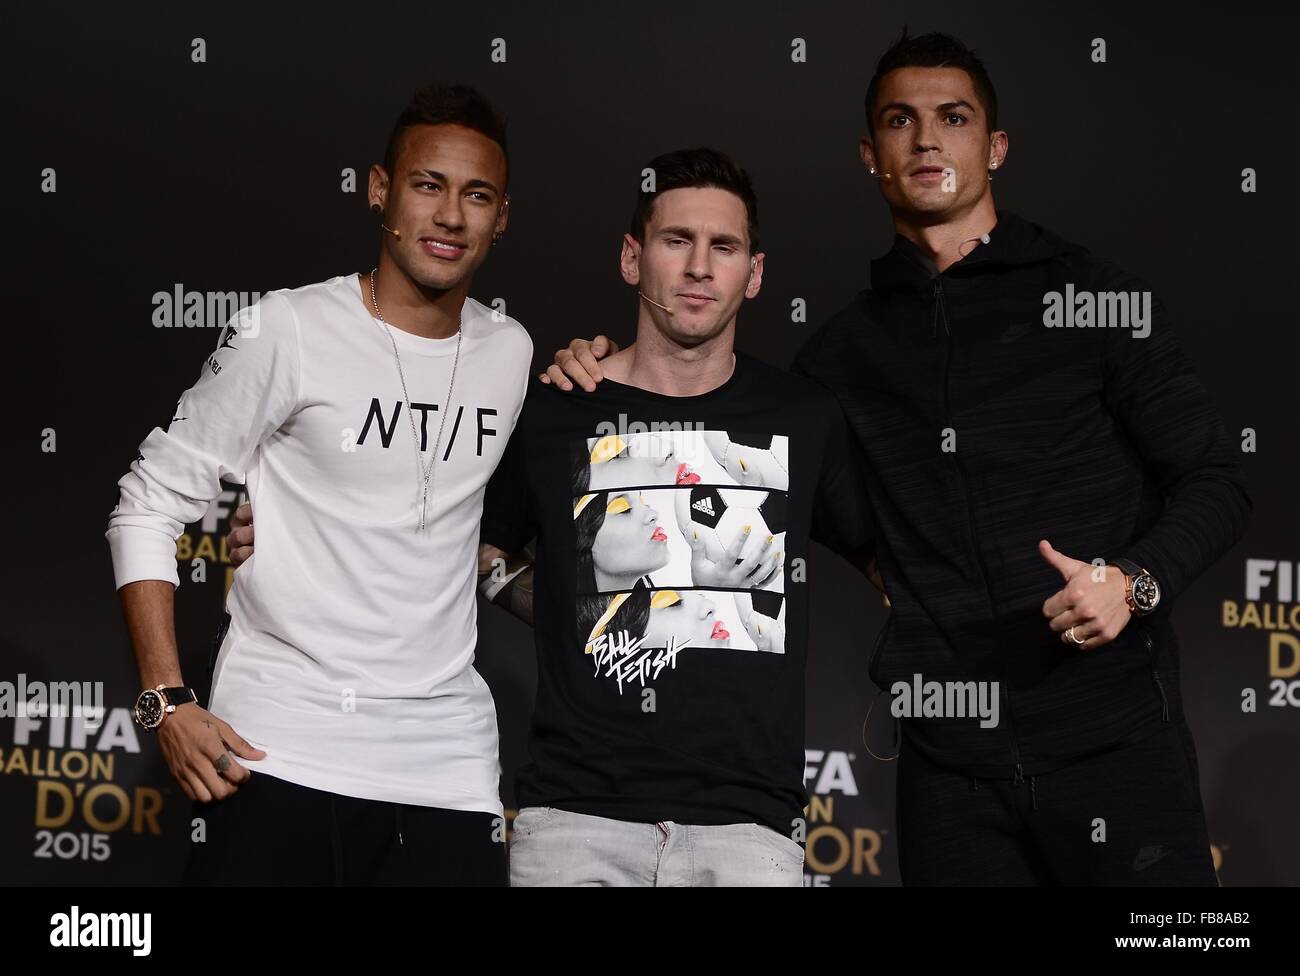 Ballon d'Or: Messi, Ronaldo and Neymar